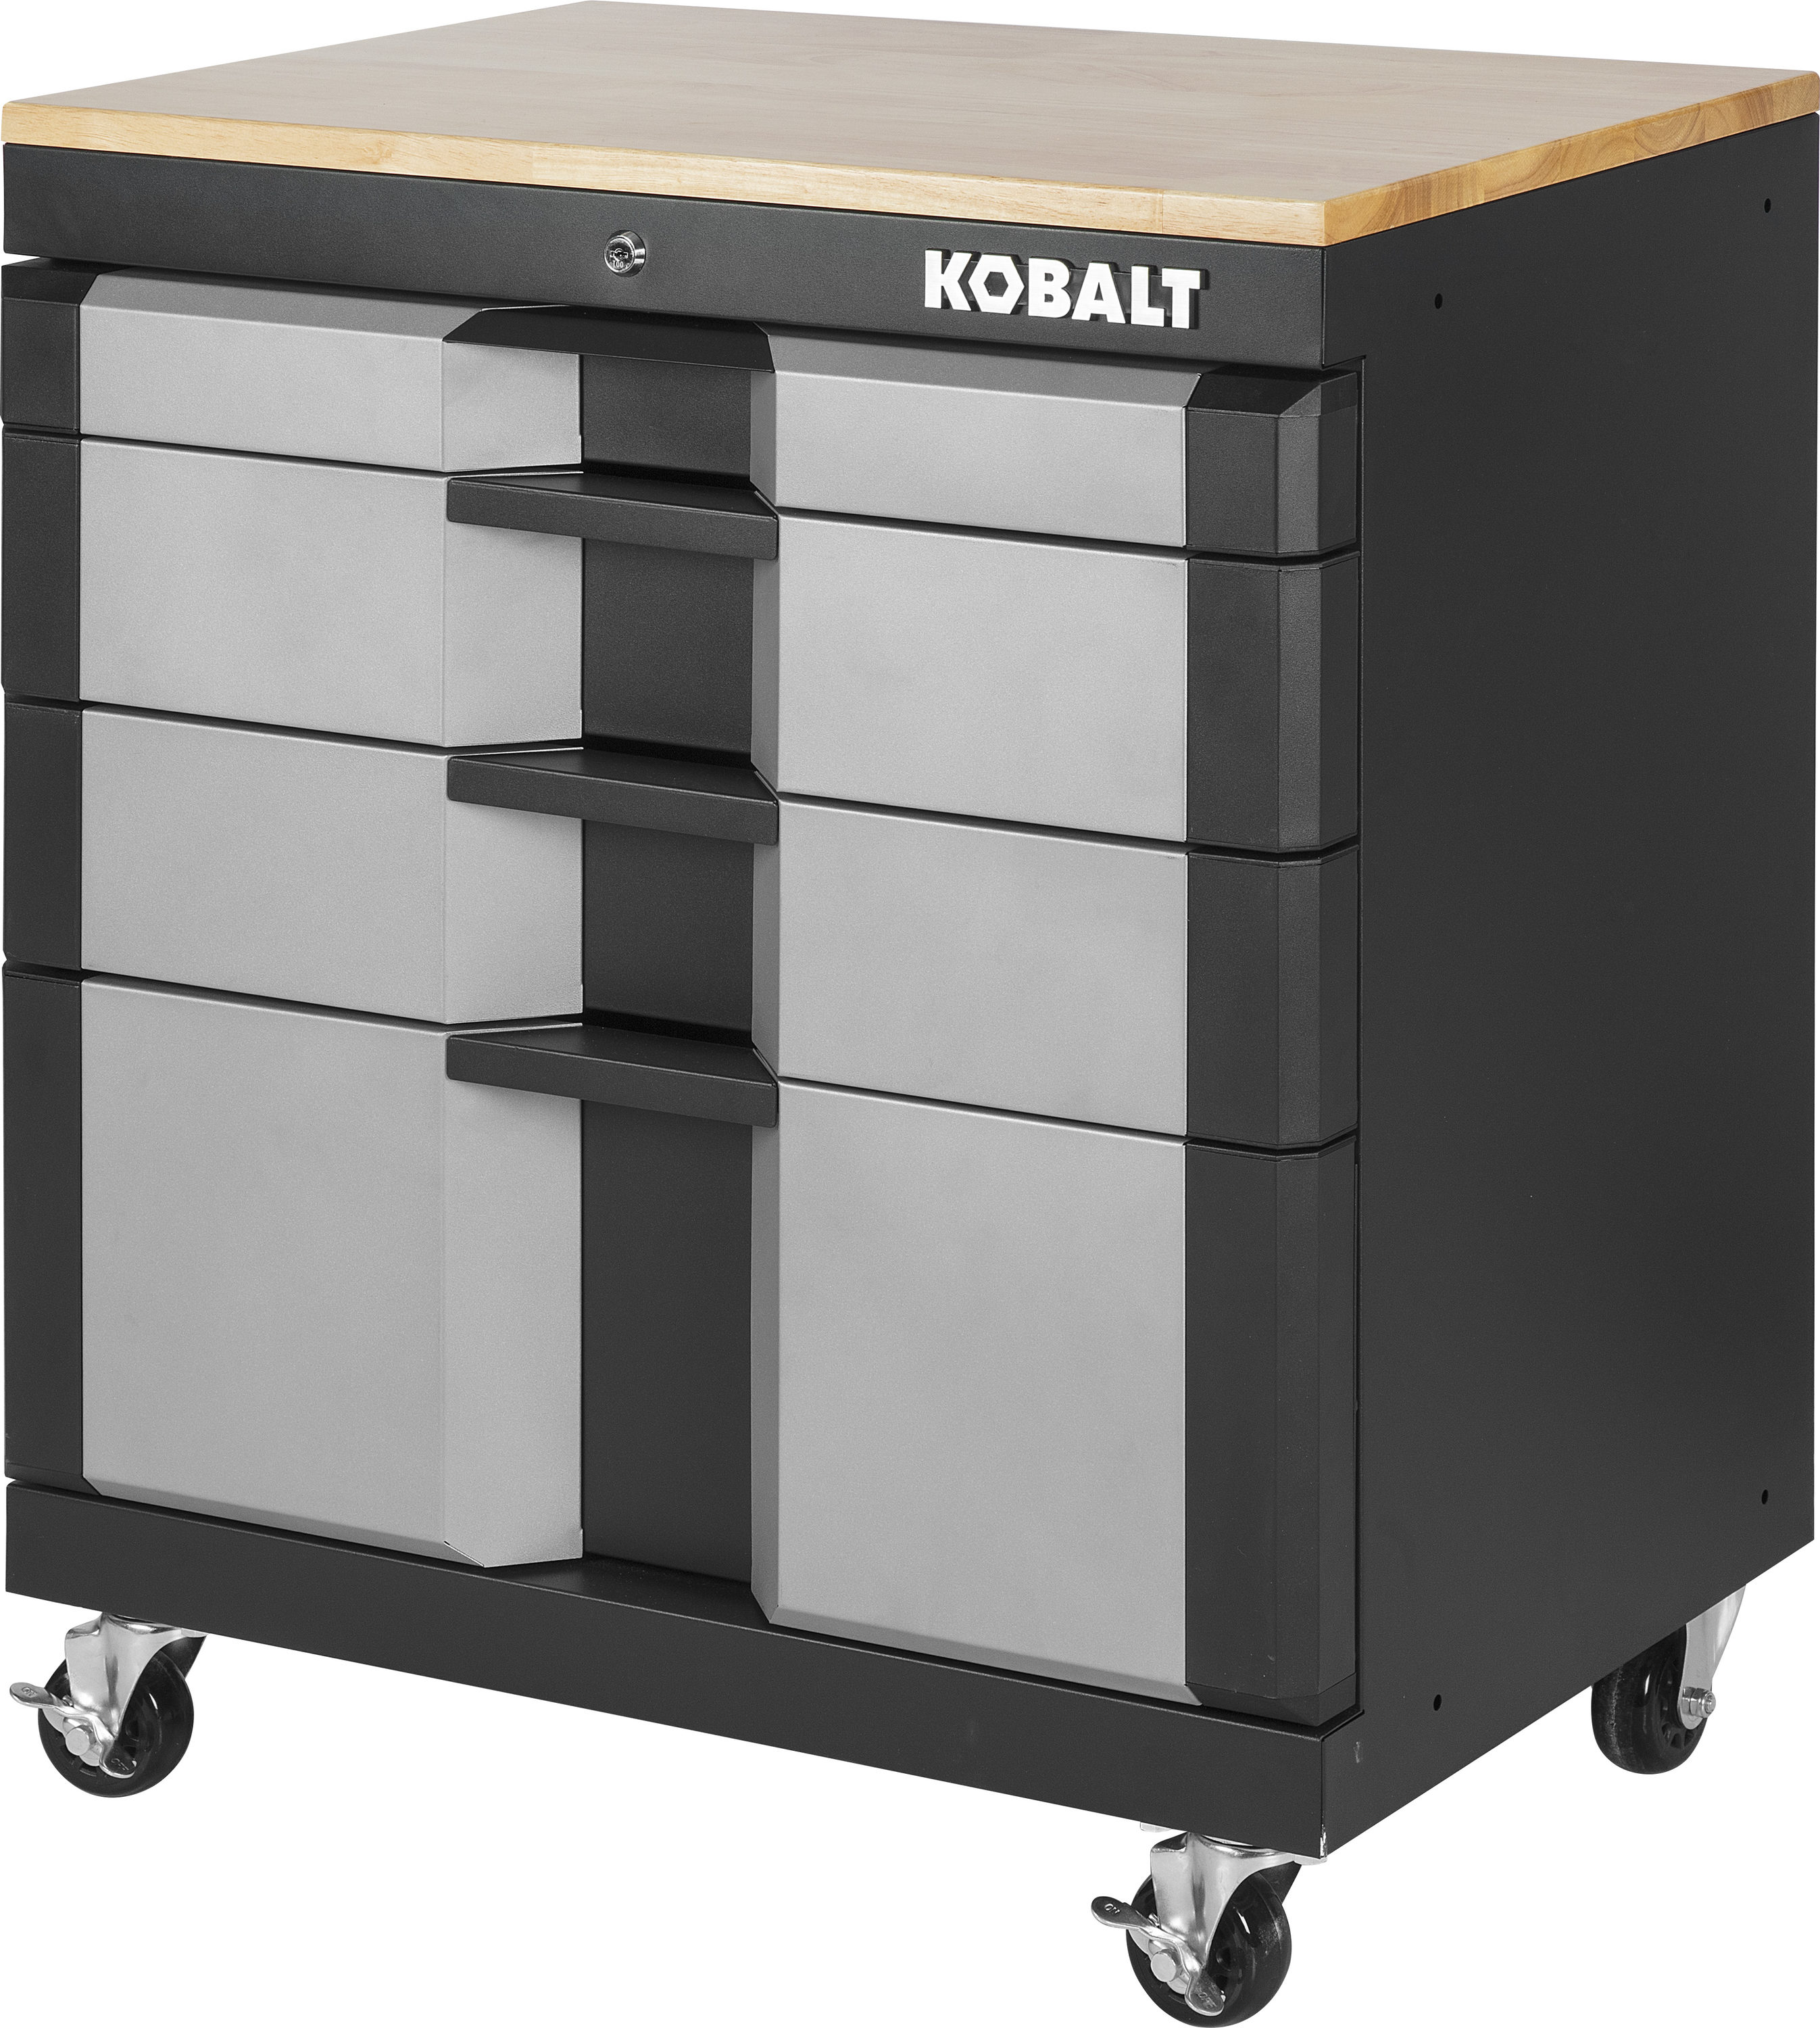 Kobalt 28 In W X 32 8 H 18 5 D Steel Freestanding Garage Cabinet 19006